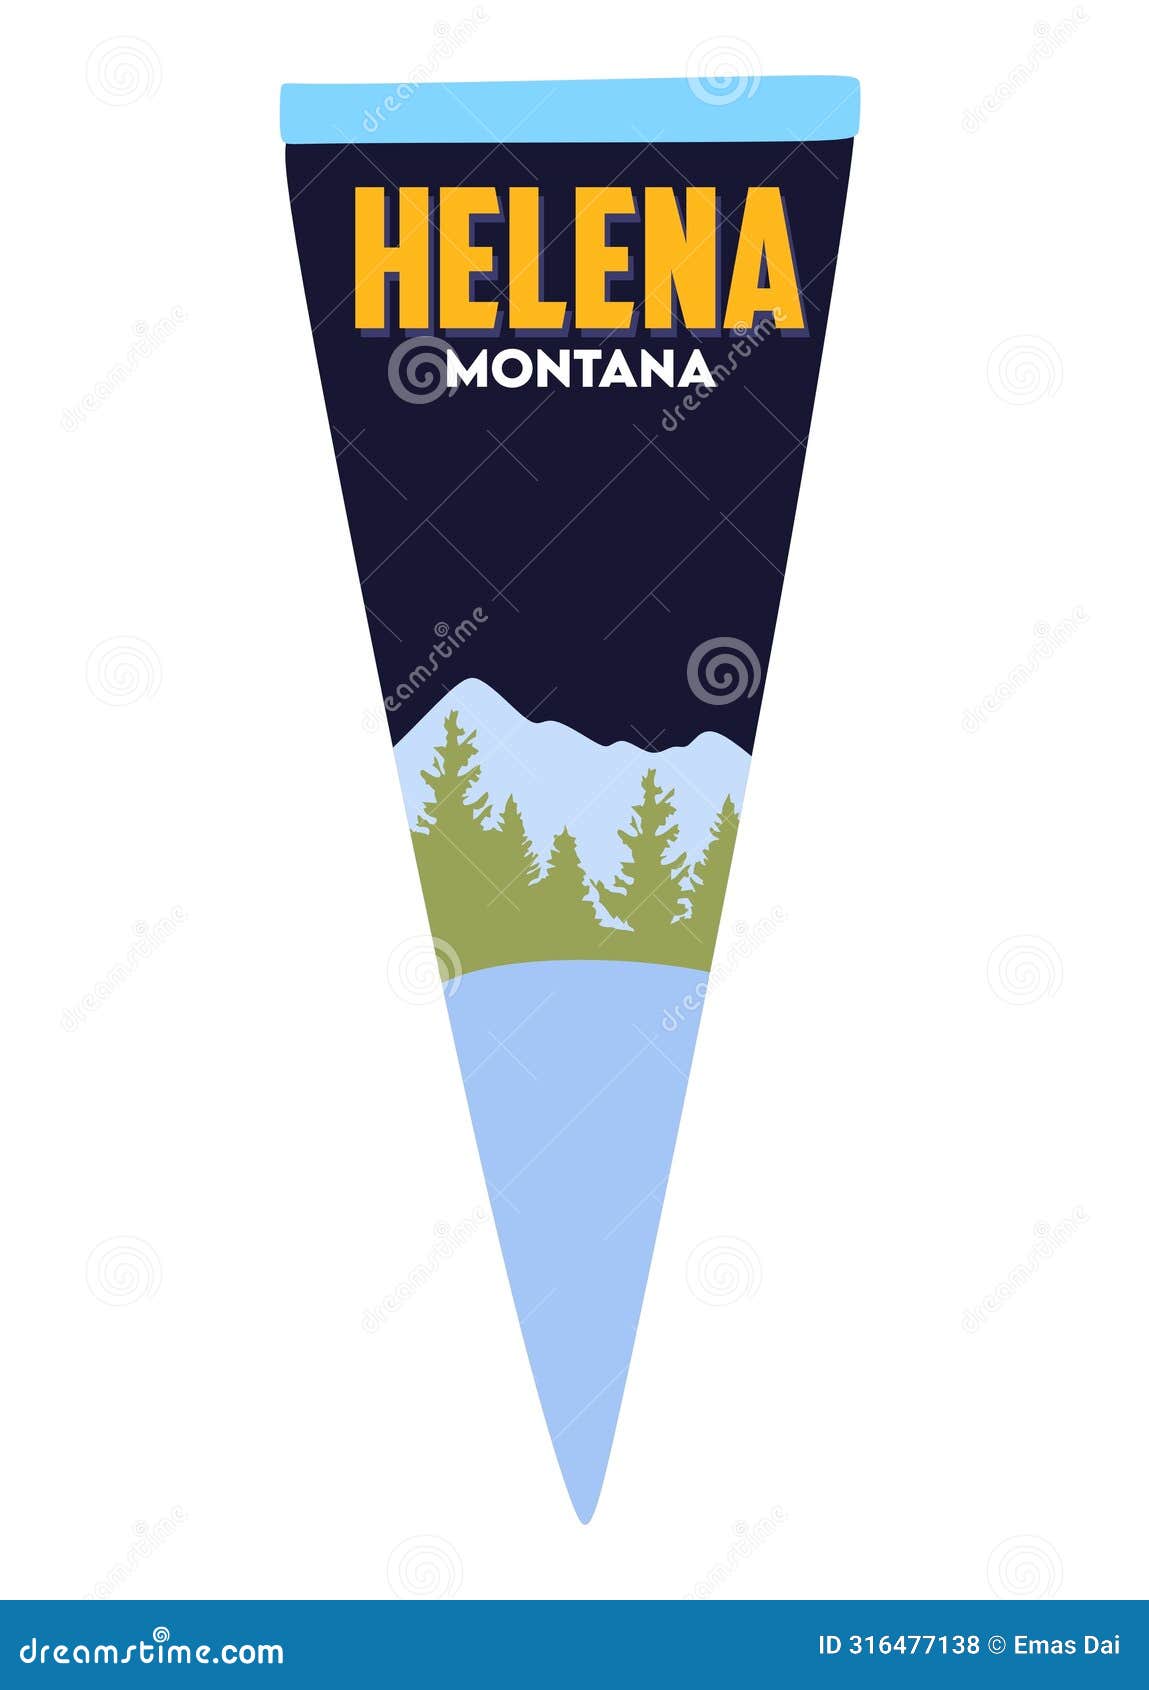 helena montana with beautiful view